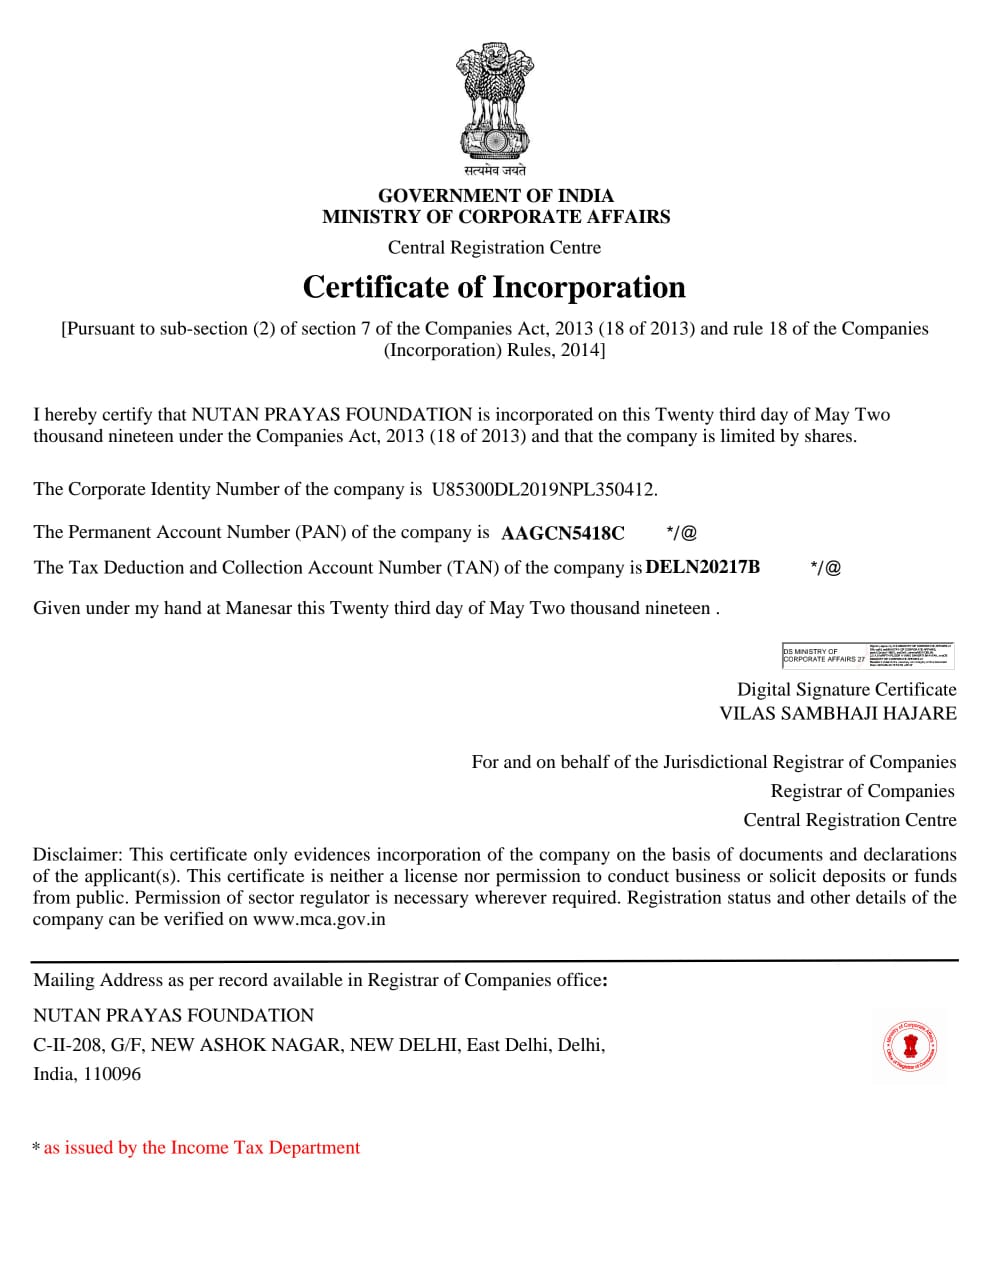 Certificate Of Incorporation - nutan prayas foundation